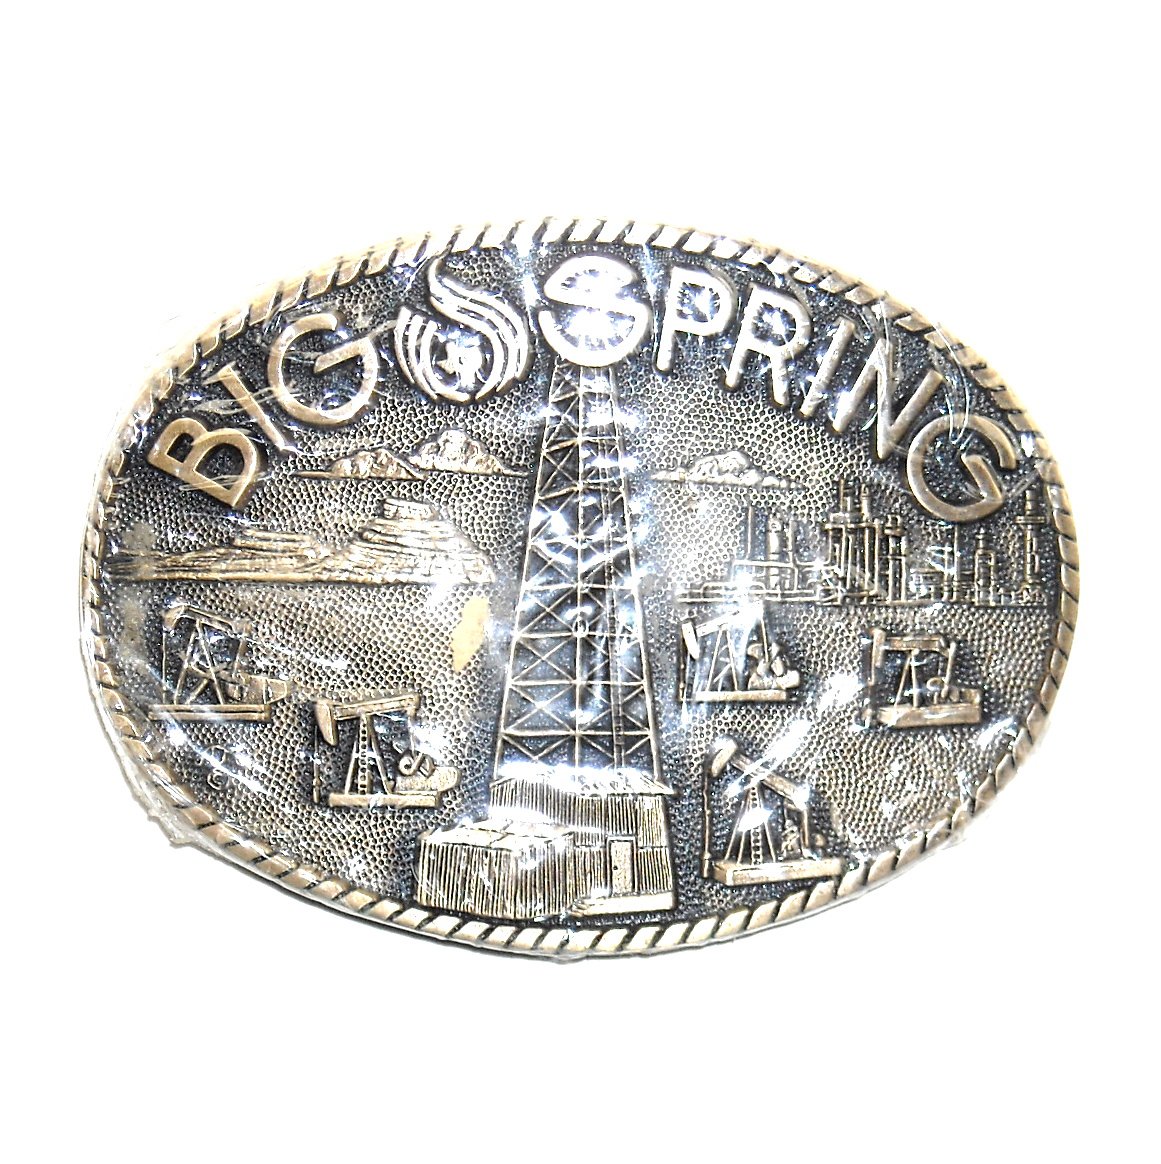 Oil Field Big Spring Texas Independence ADM Award Design Brass Belt Buckle